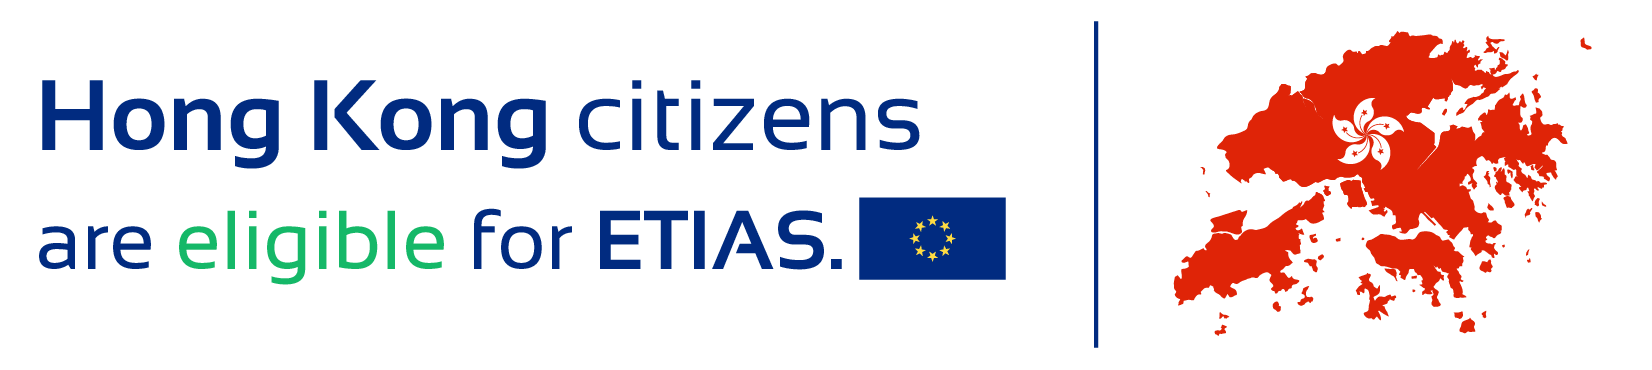 Hong Kong citizens are eligible for ETIAS